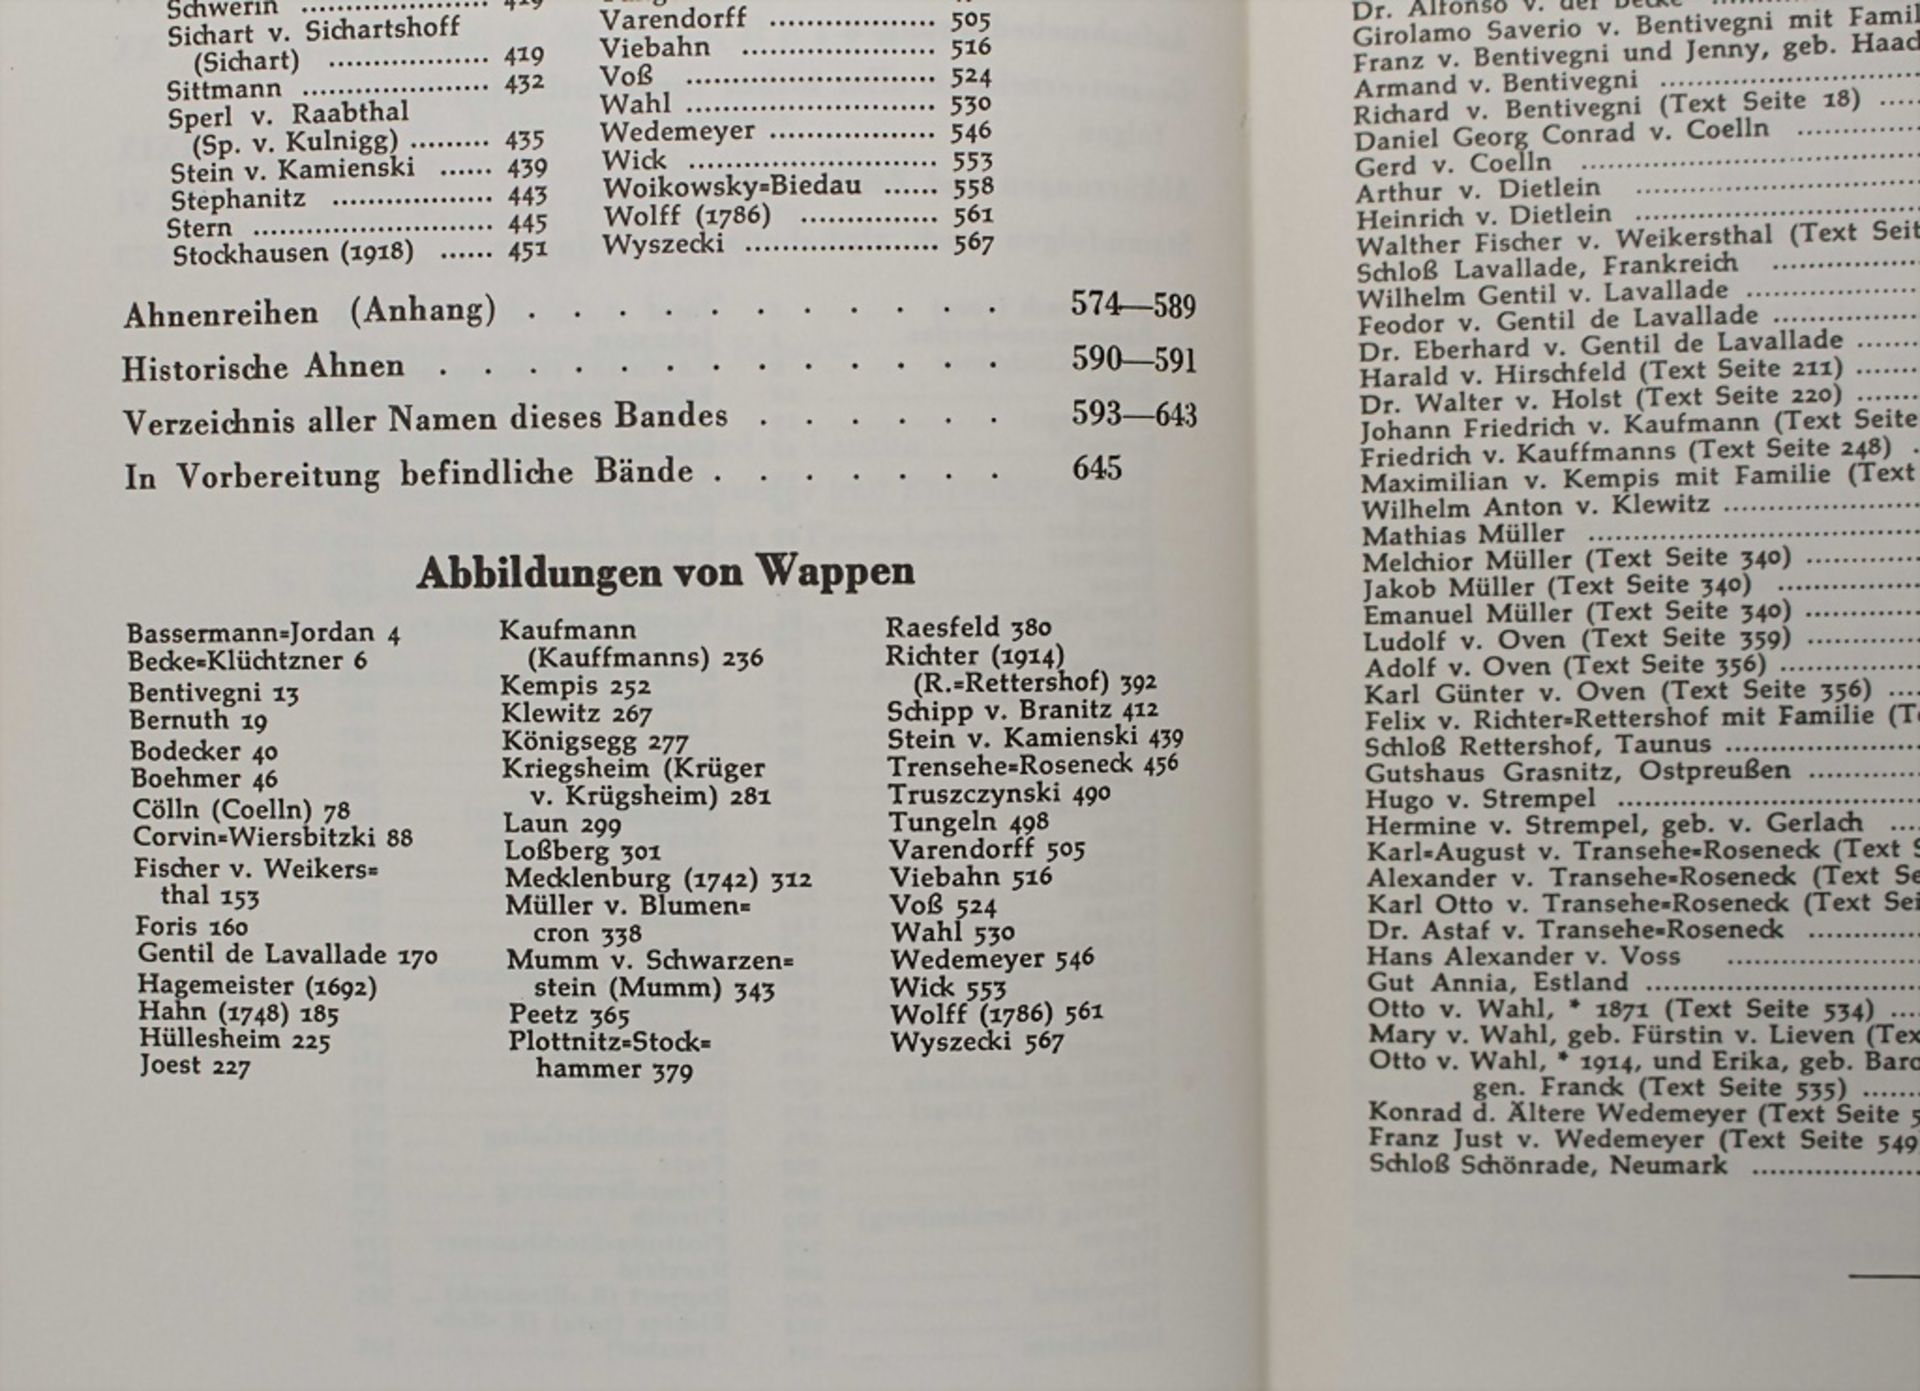 Genealogisches Handbuch des Adels Band III, Glücksburg, 1958 - Image 6 of 6